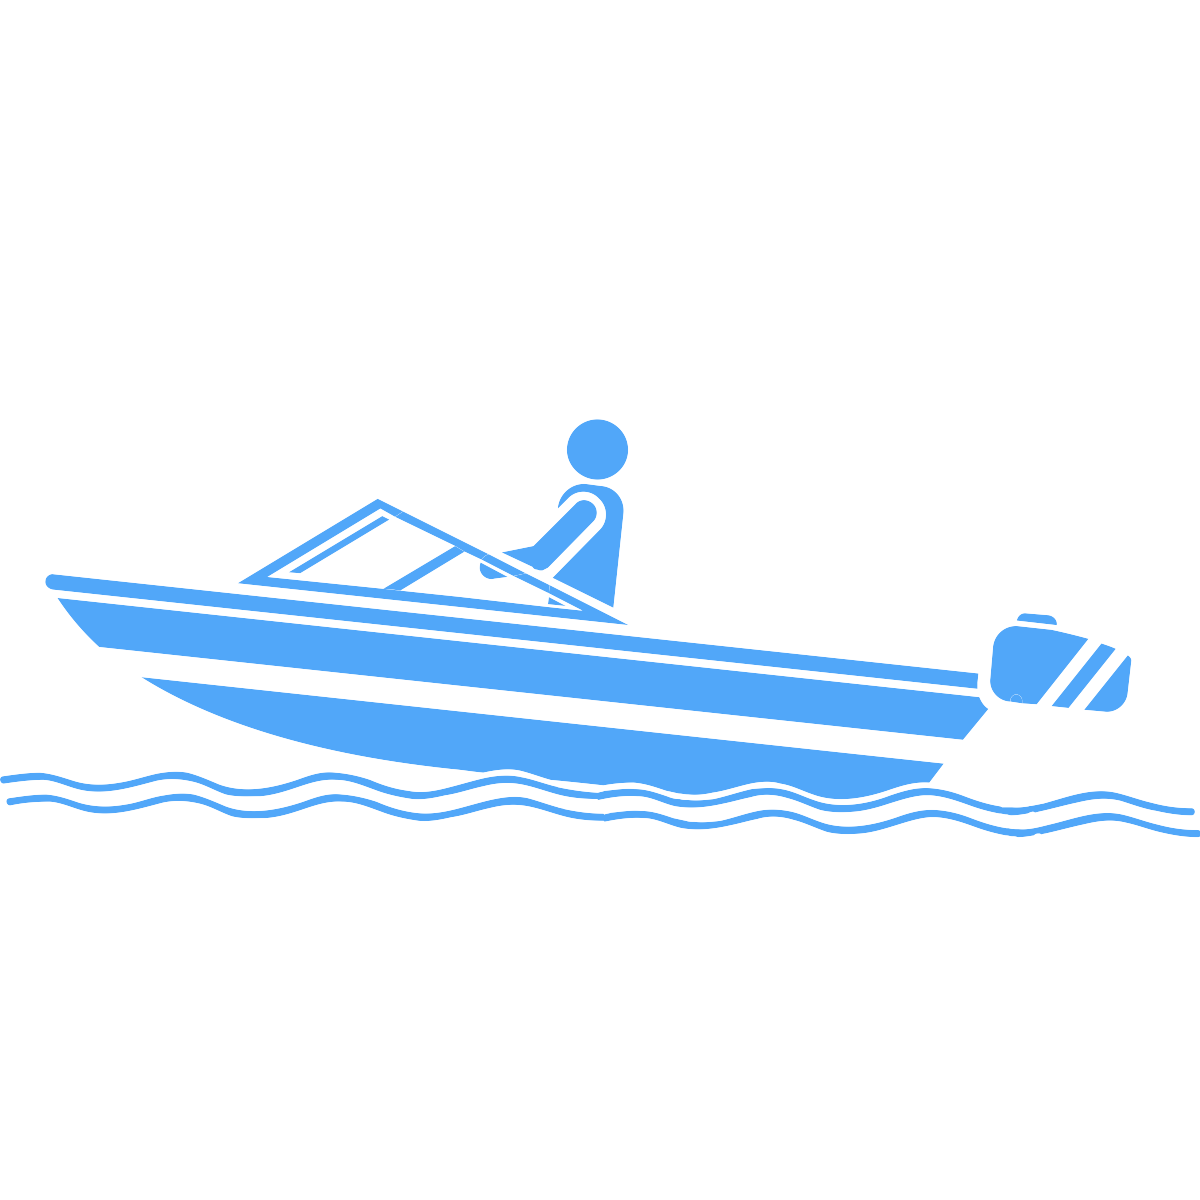 Recreation icon - a person driving a small boat